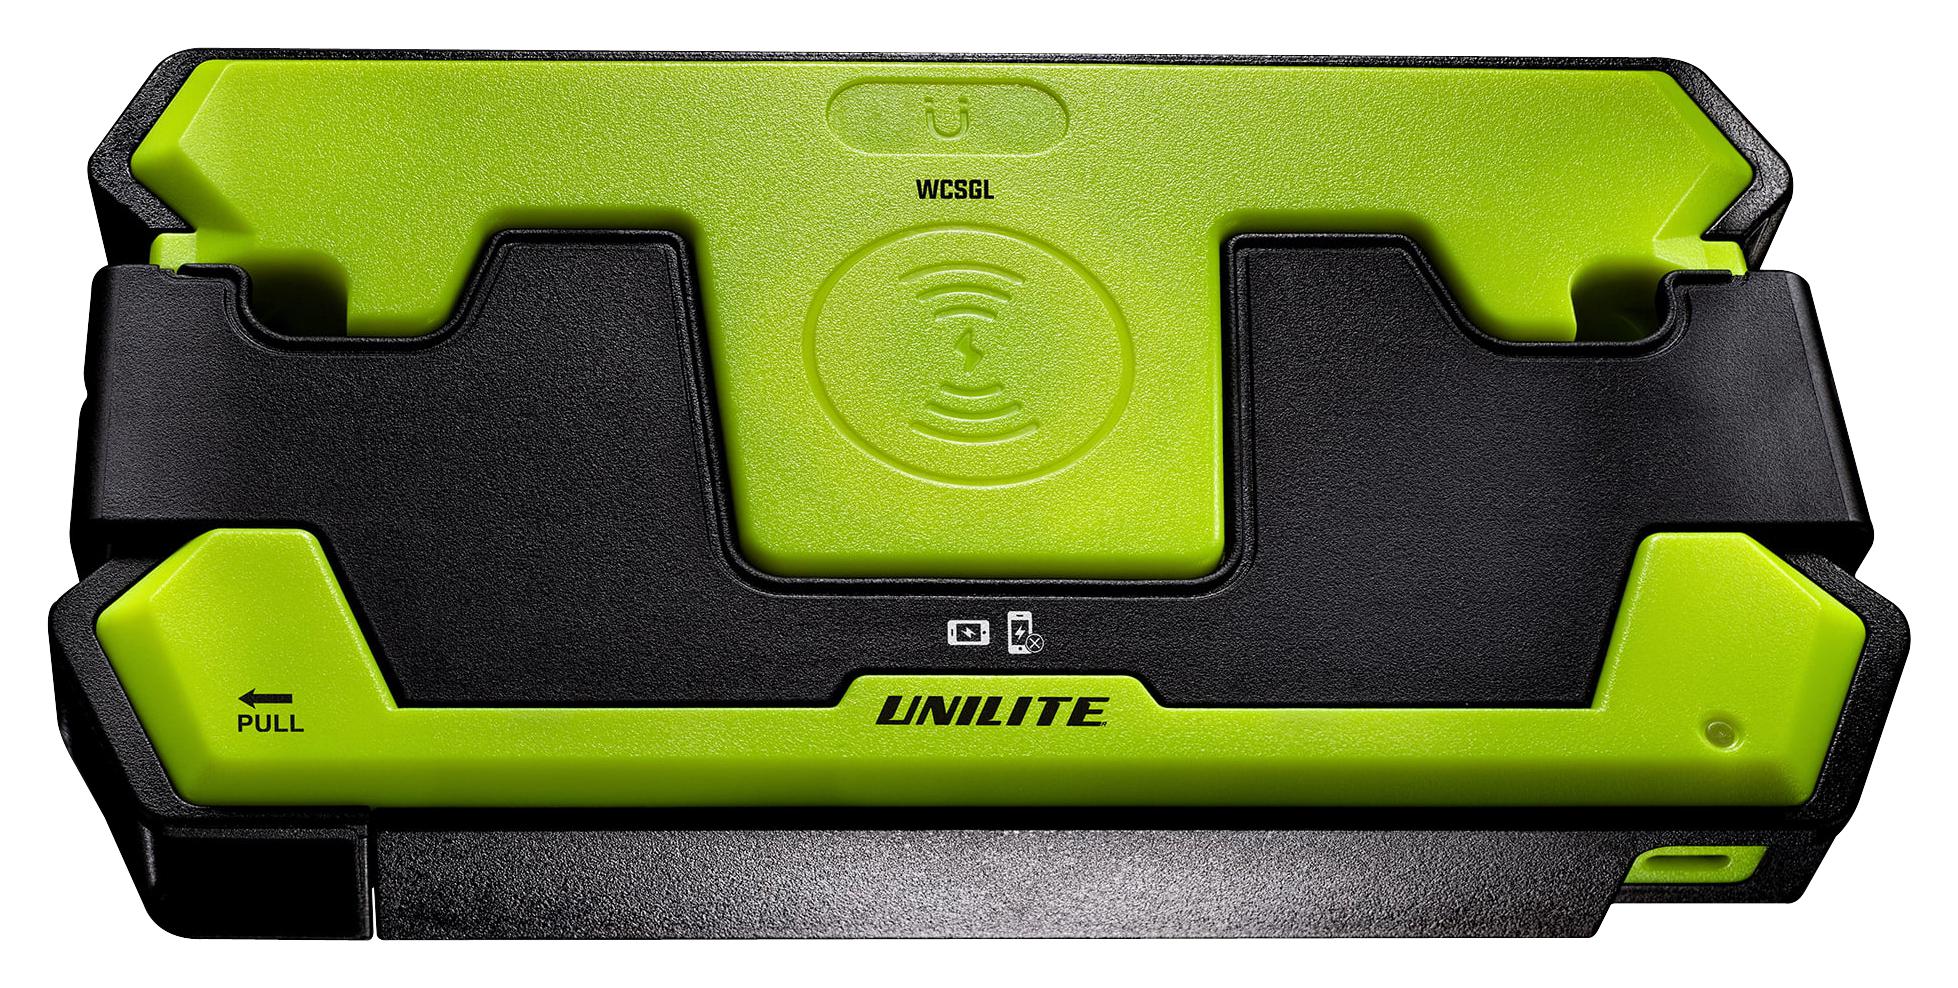 Unilite International Wcsgl Wireless Charger, Usb-C, 3A, 5V